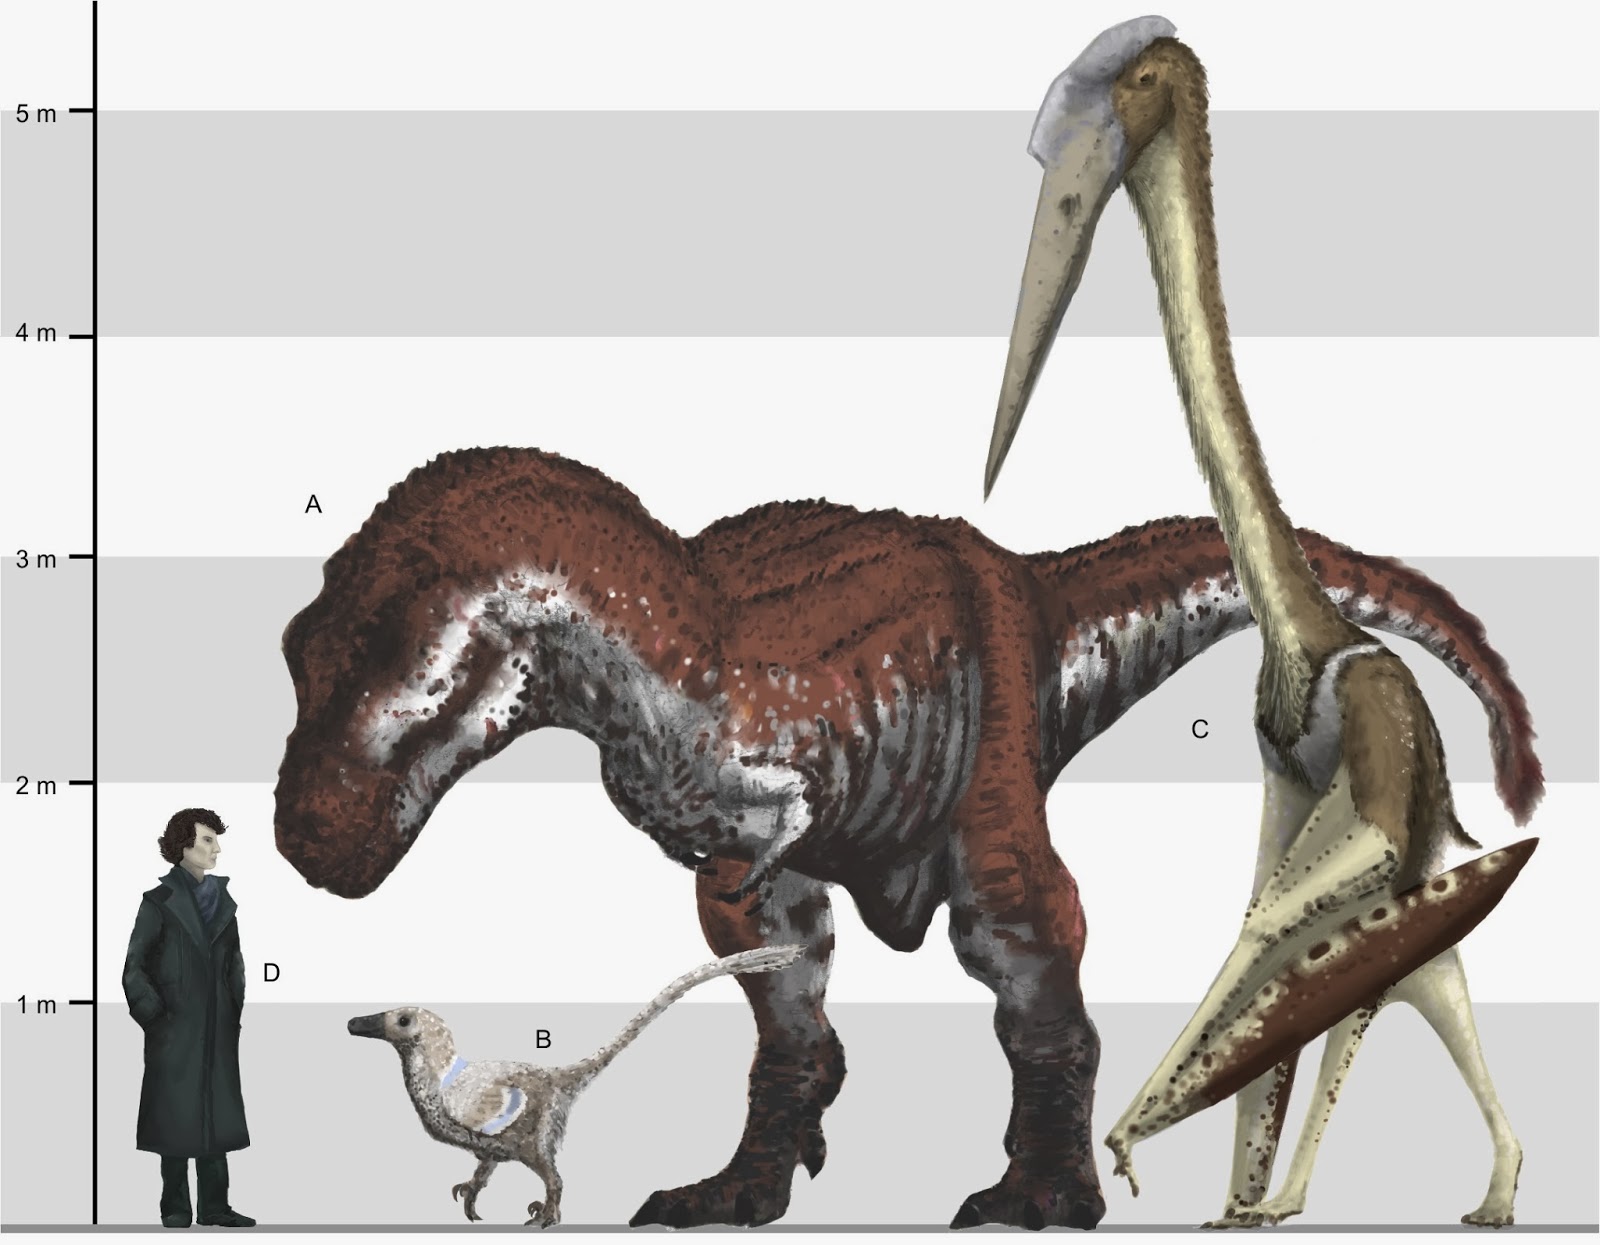 Why Isn't Pterodactyl a Dinosaur?